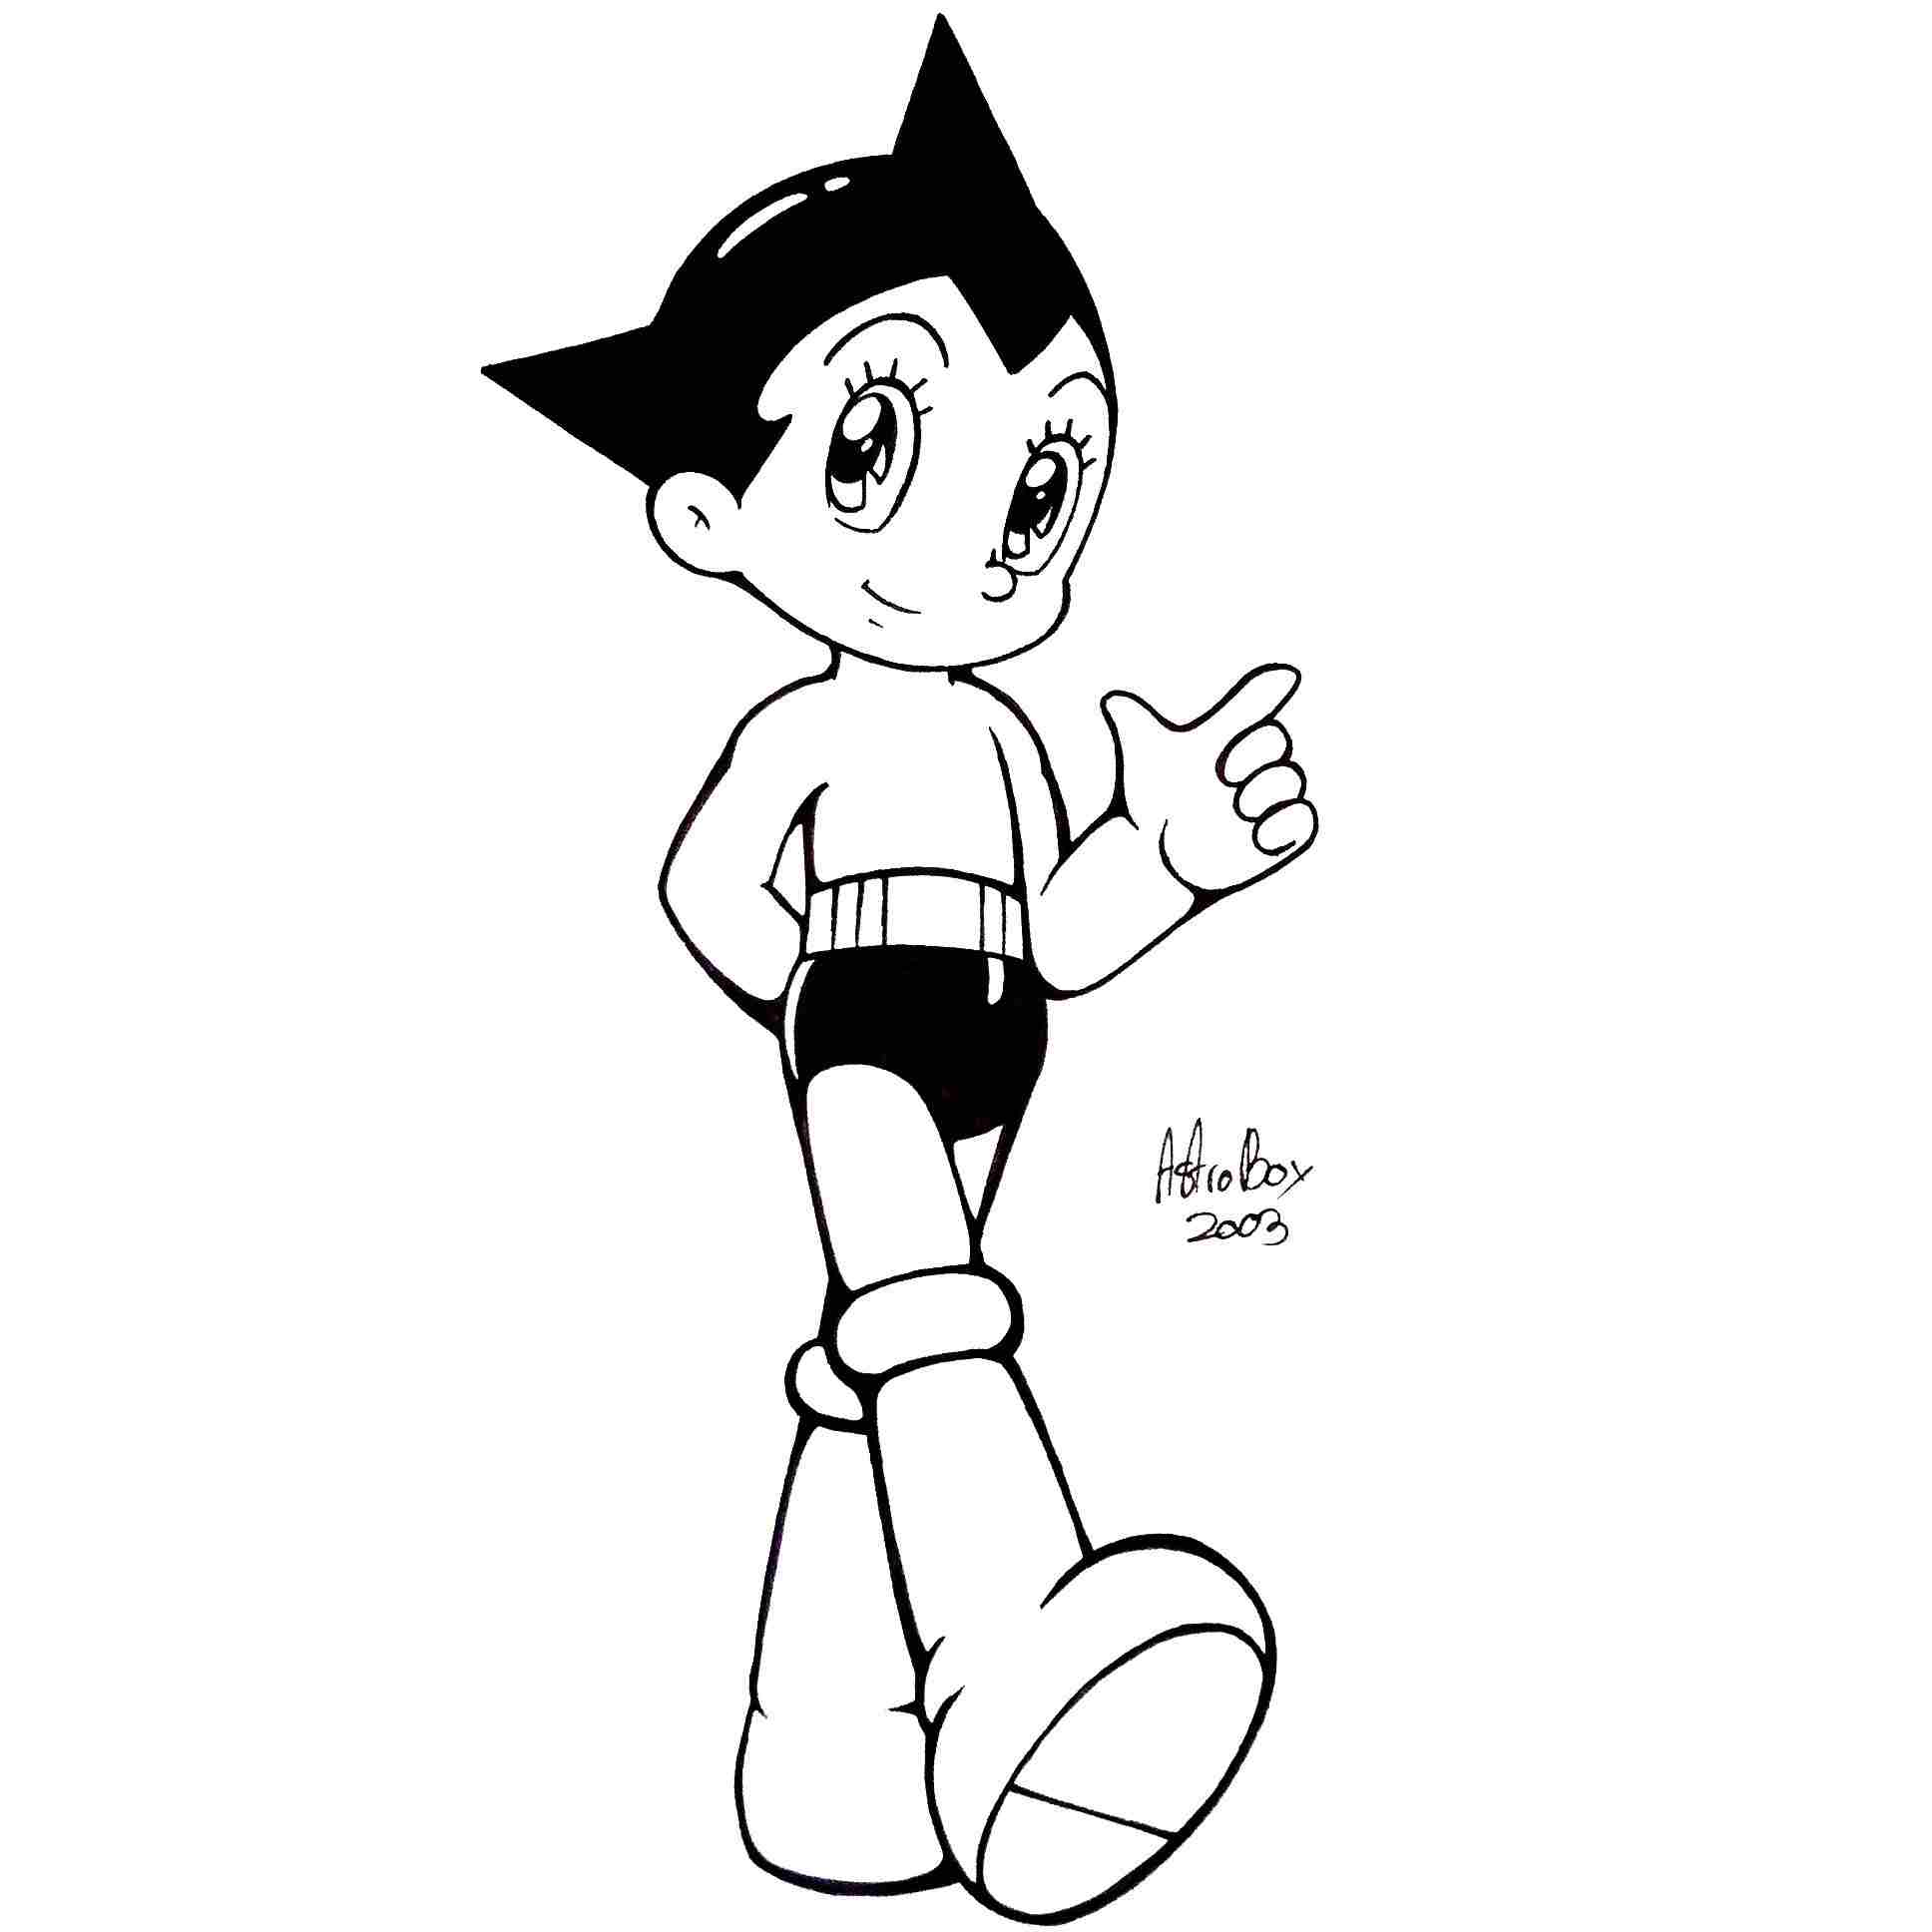 Bonito Astro Boy no filme de animação Astro Boy de Astro Boy